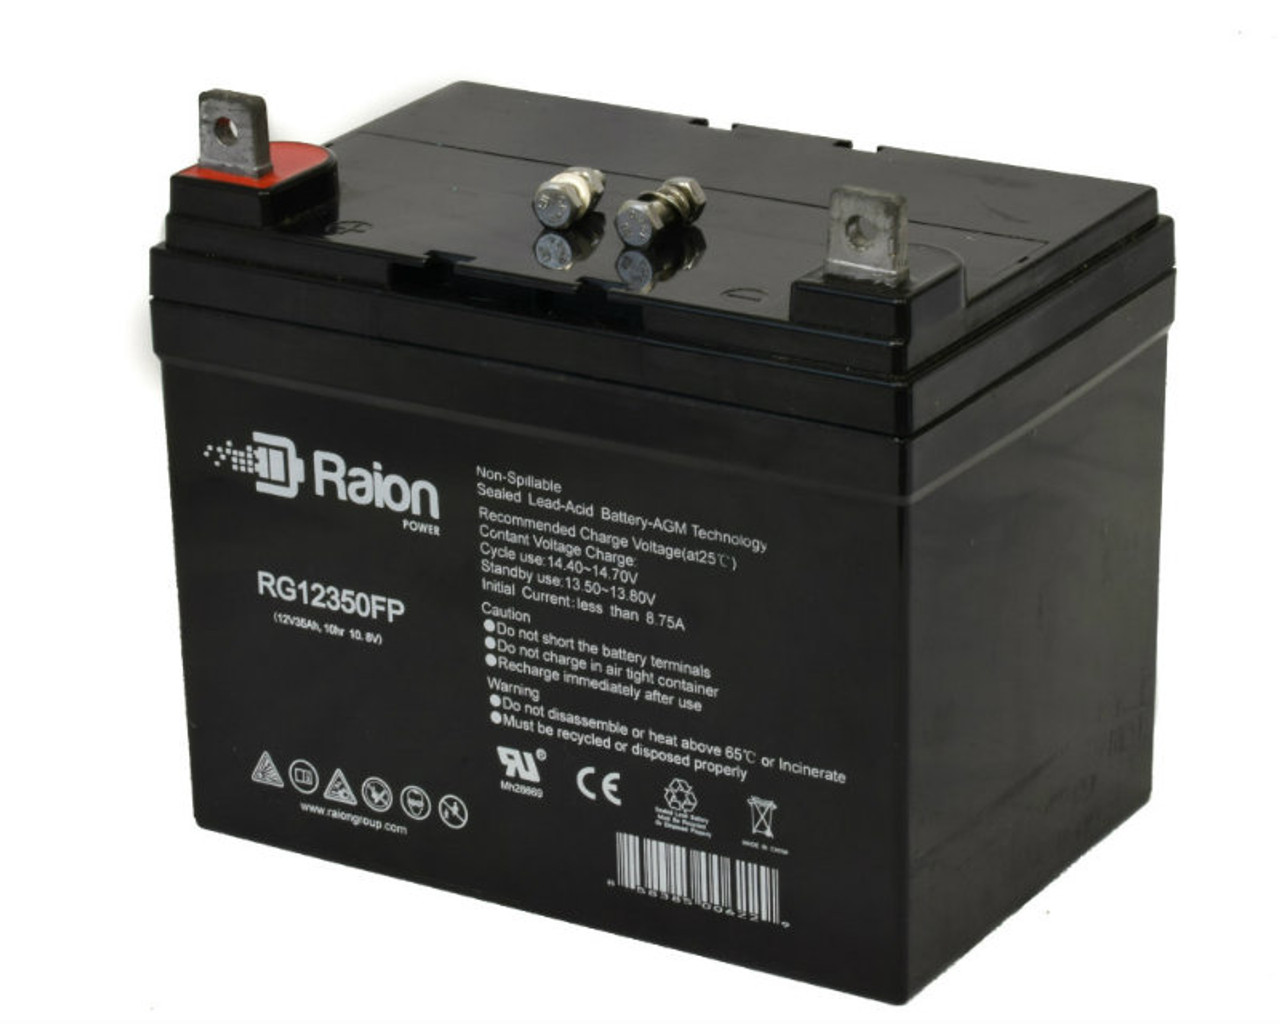 Raion Power Replacement 12V 35Ah Battery for Husqvarna YTH 1848 XP - 1 Pack